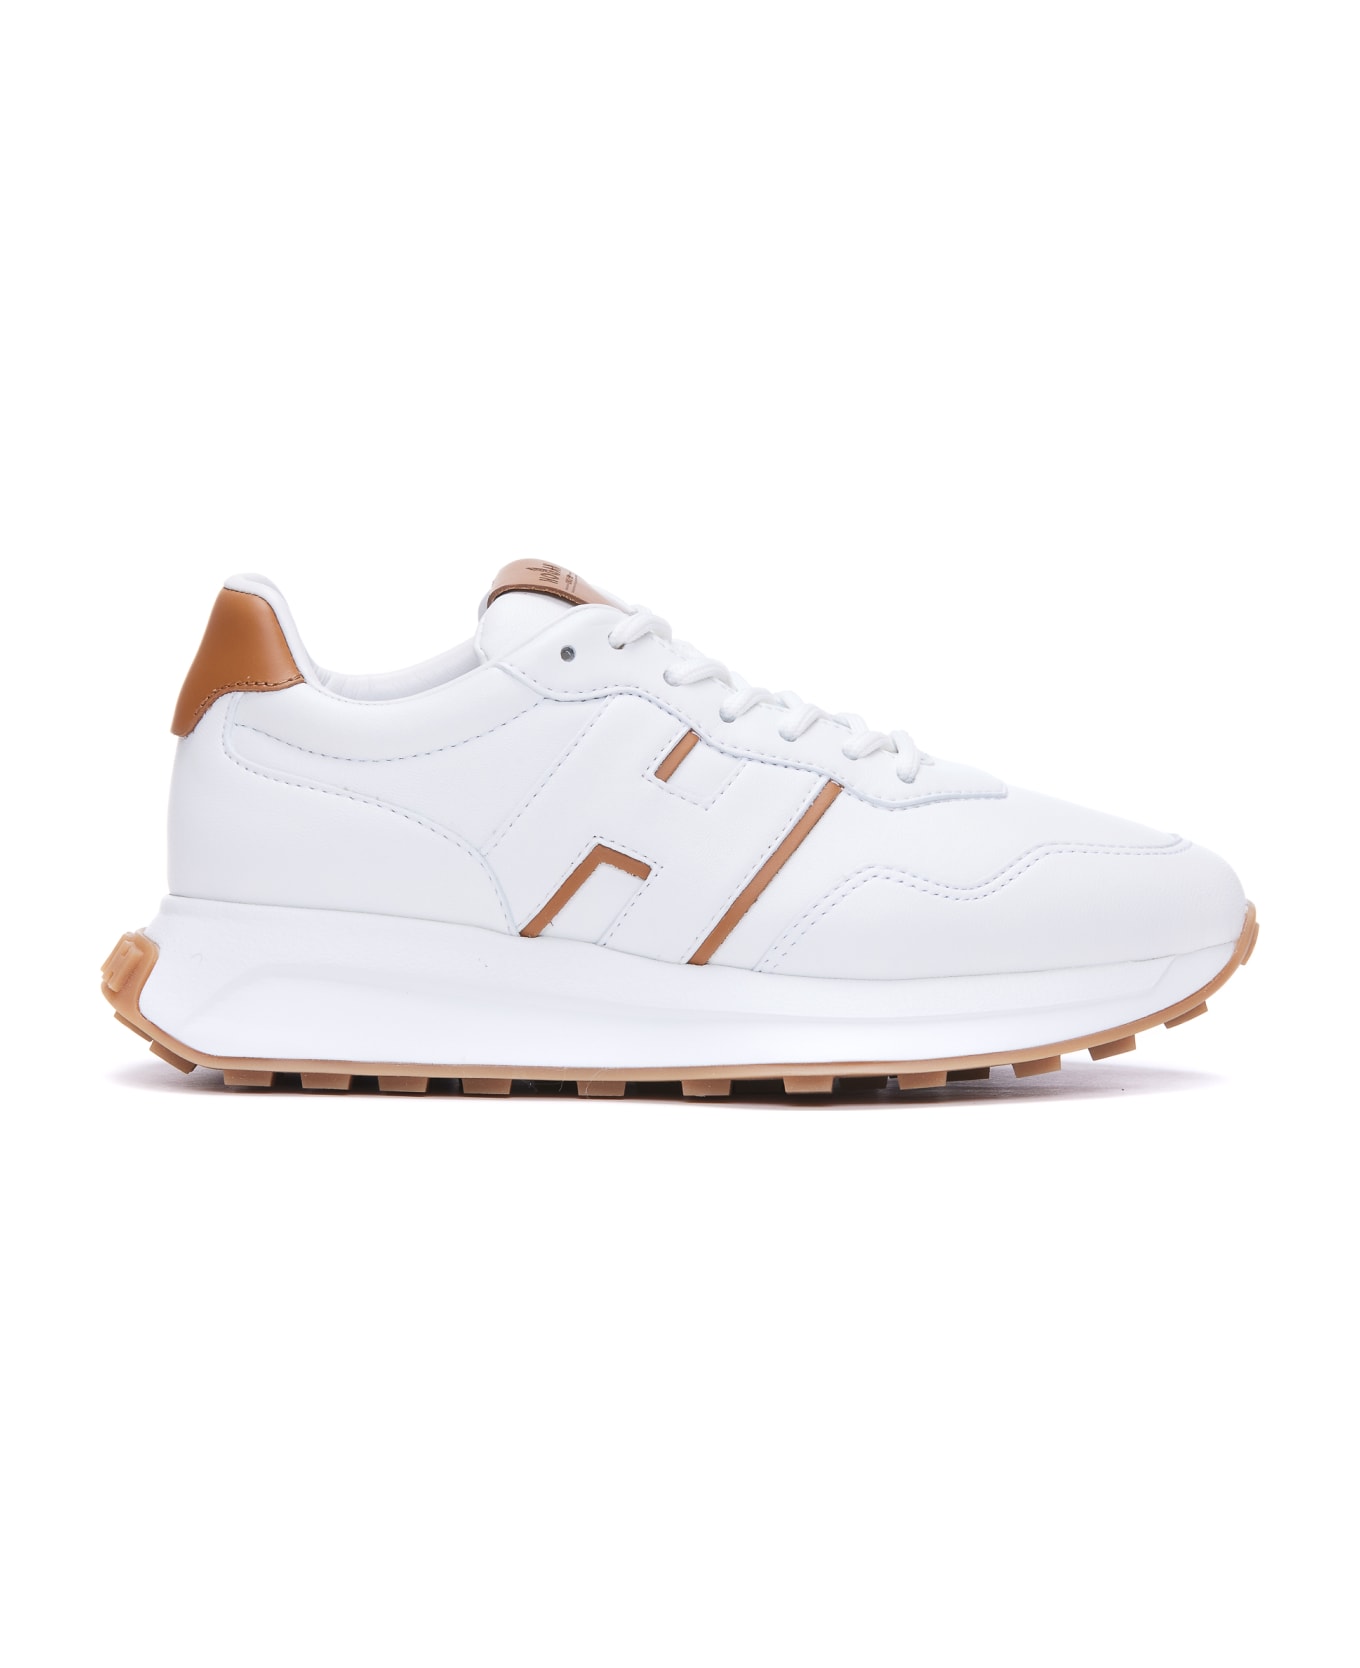 Hogan H641 Sneakers - Bianco/marrone